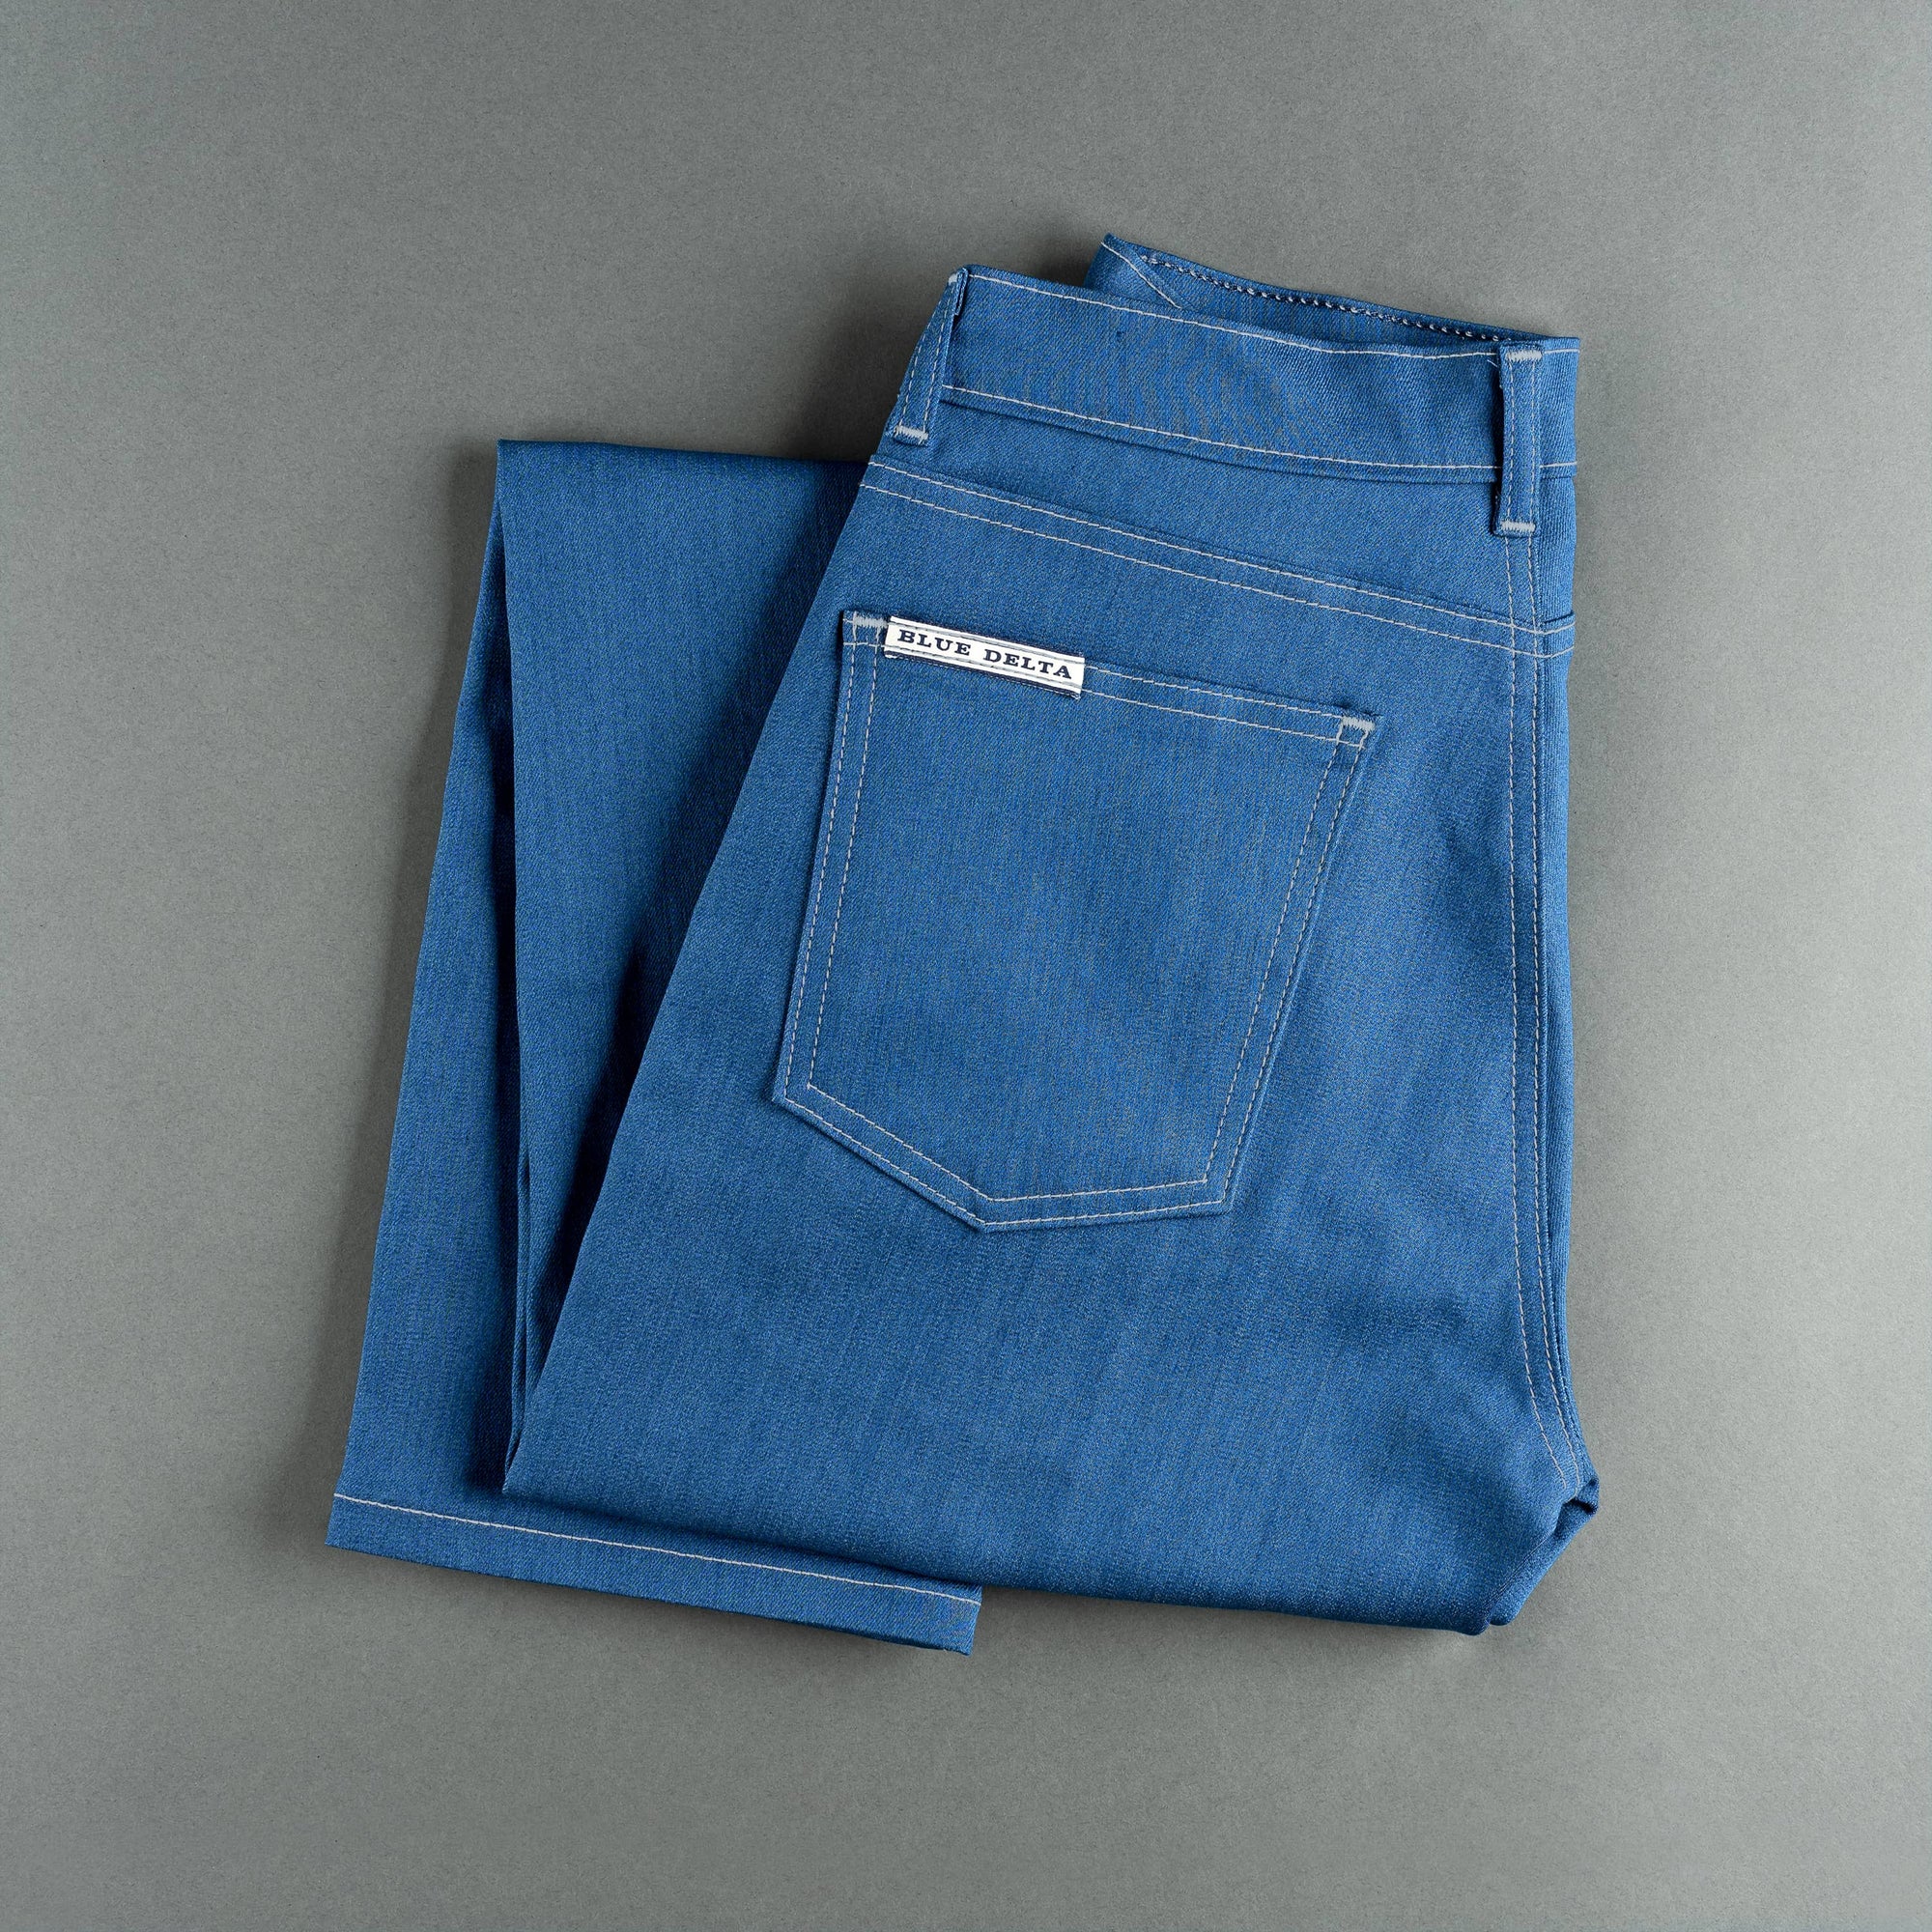 blue delta jeans price